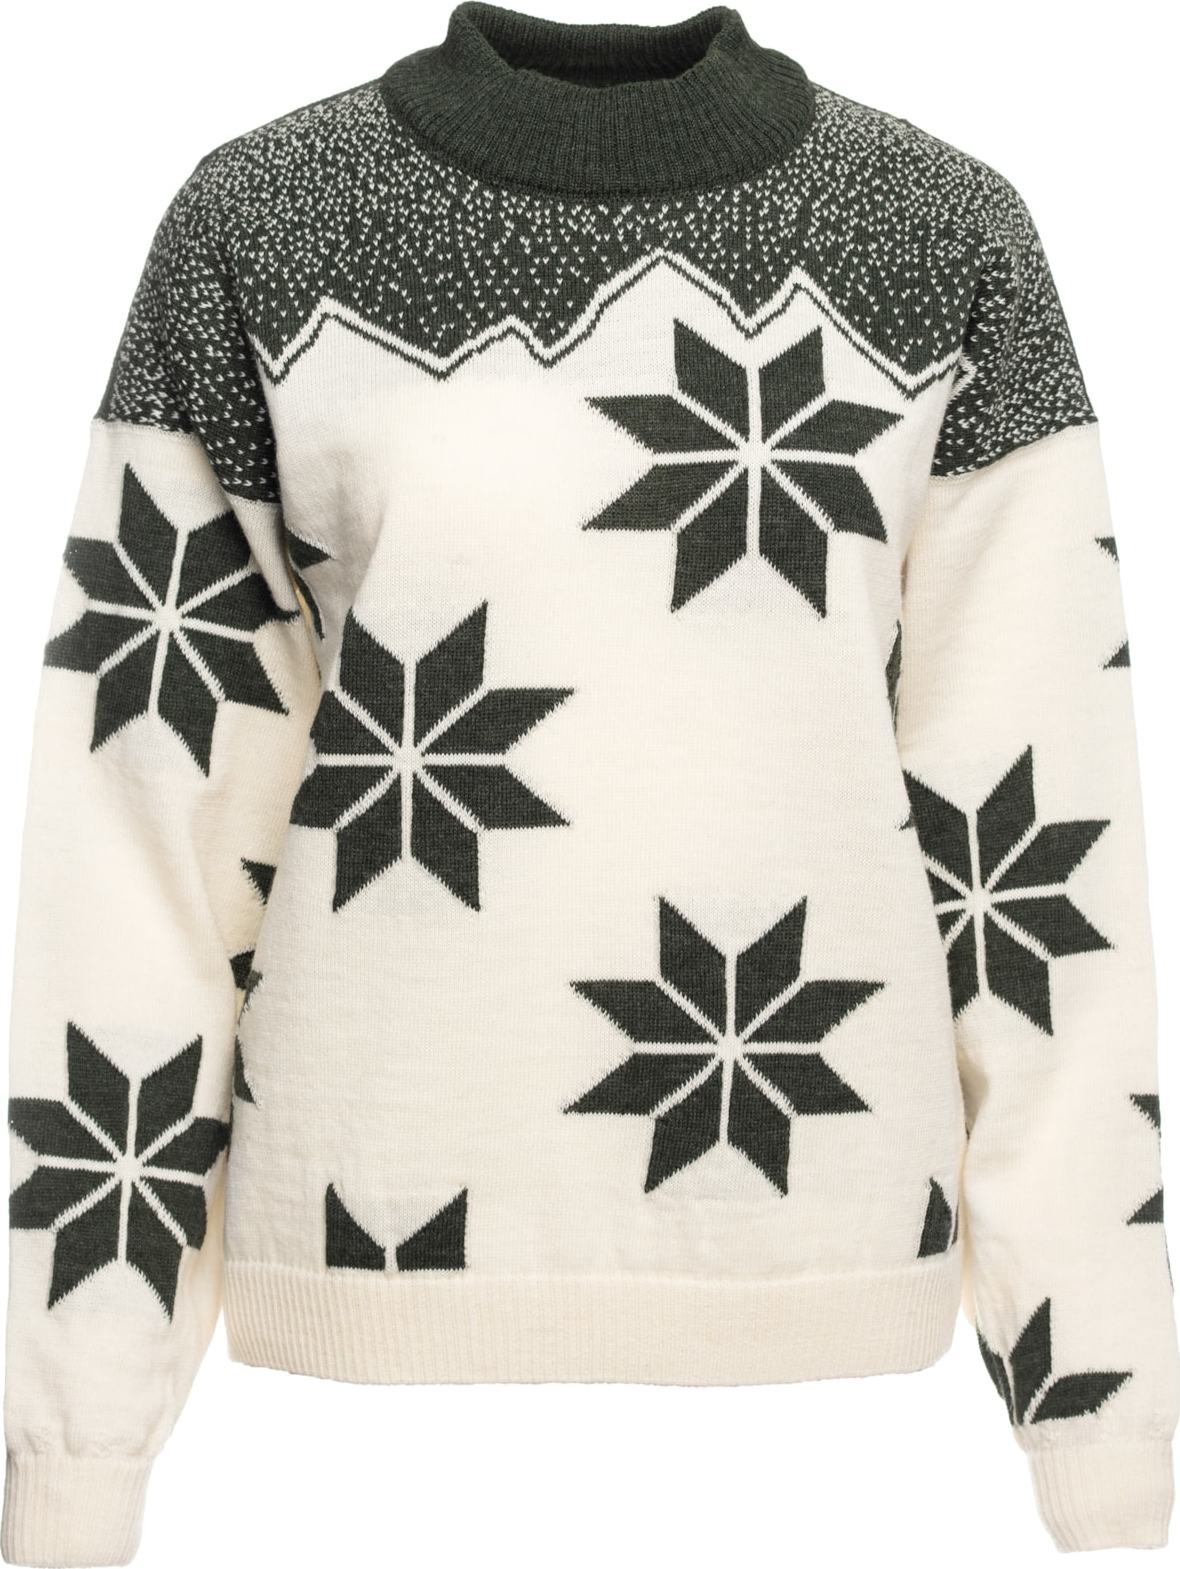 Women's Winter Star Sweater Offwhite Dark Green